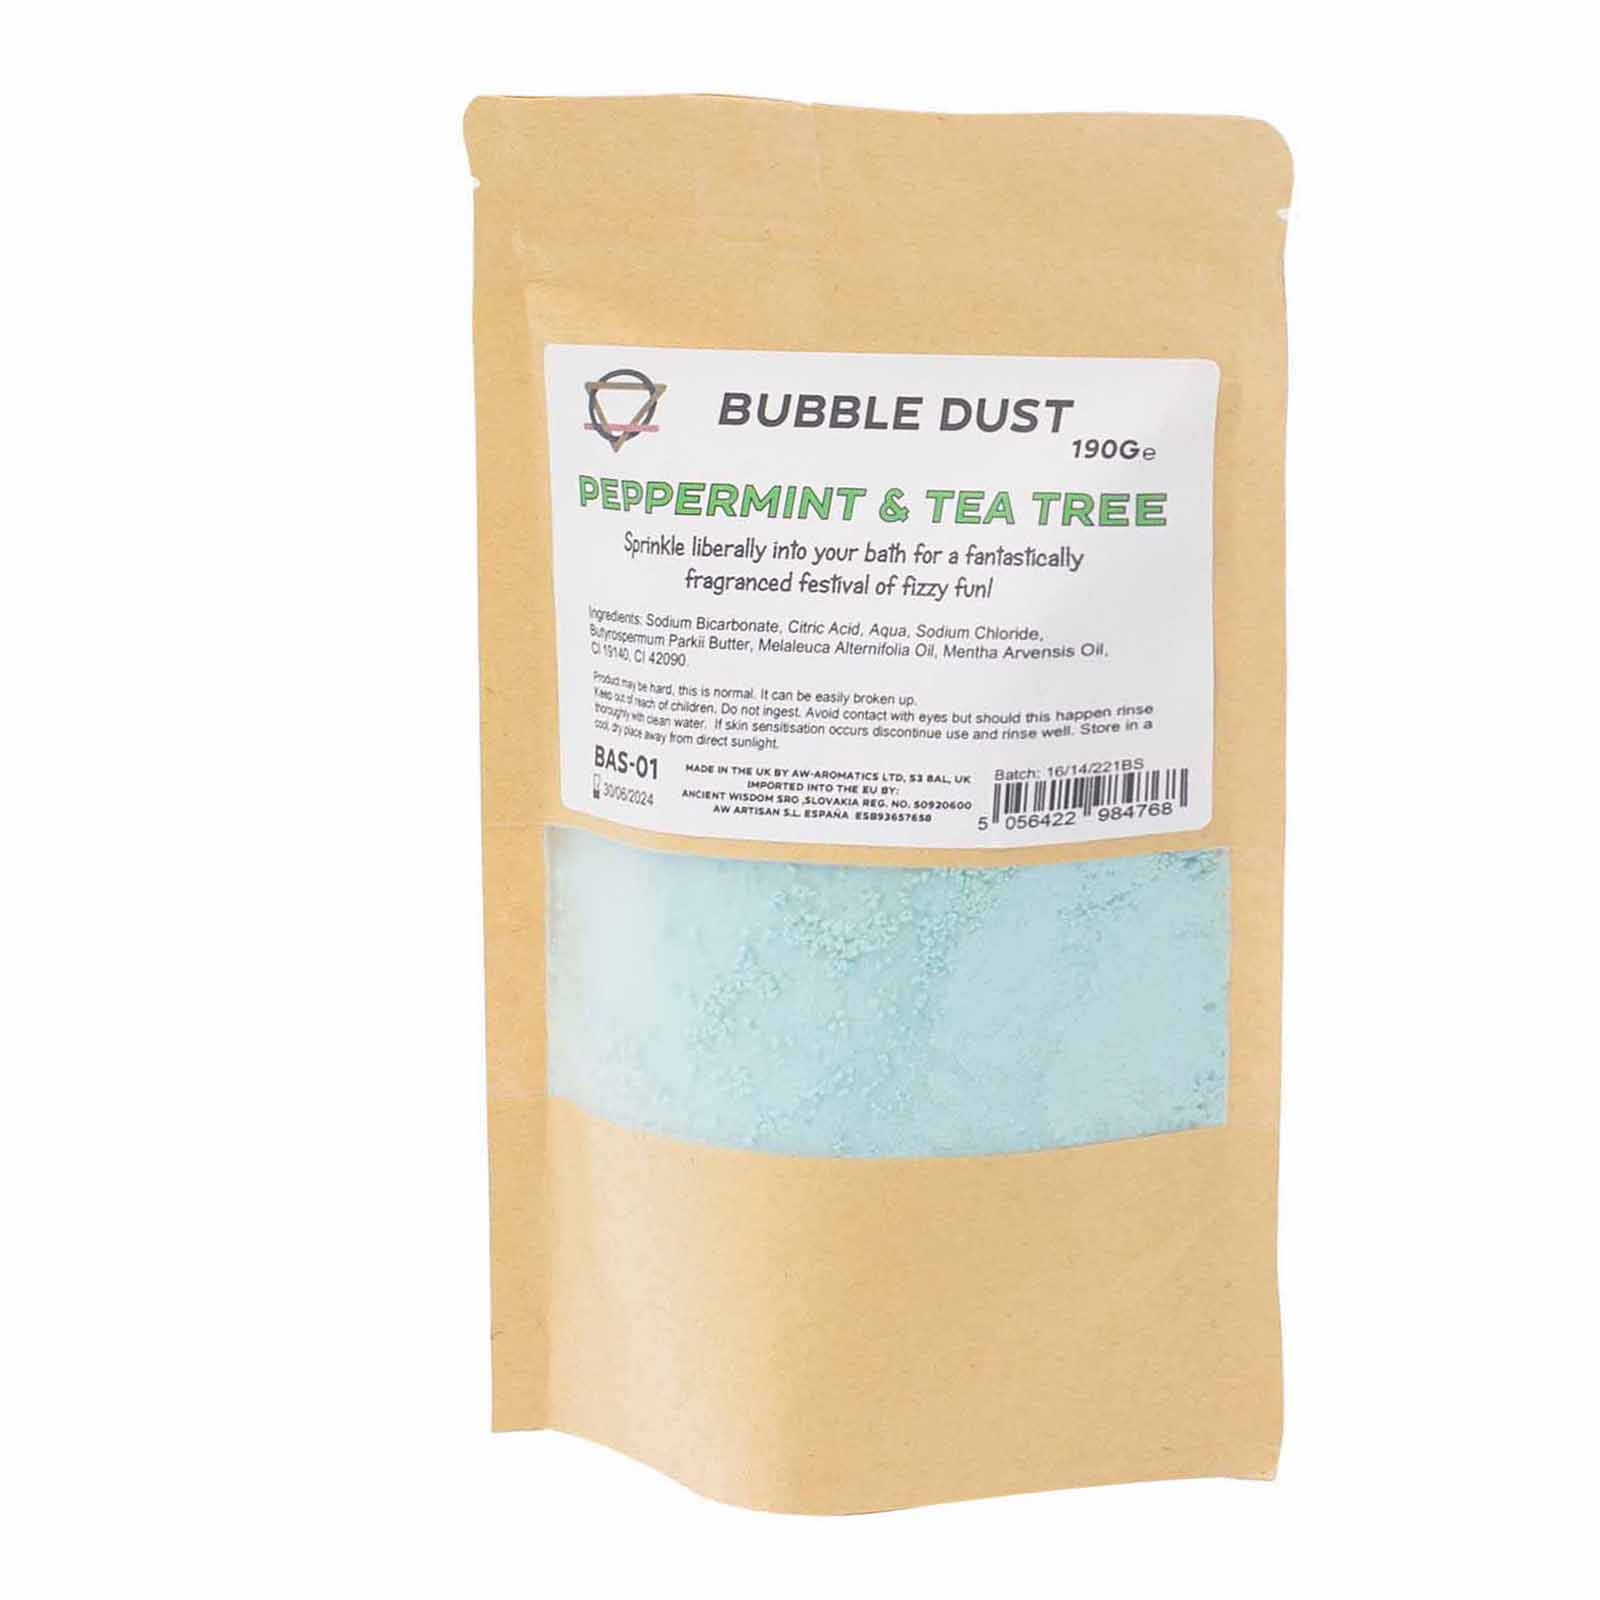 Peppermint & Tea Tree Bath Dust 190g